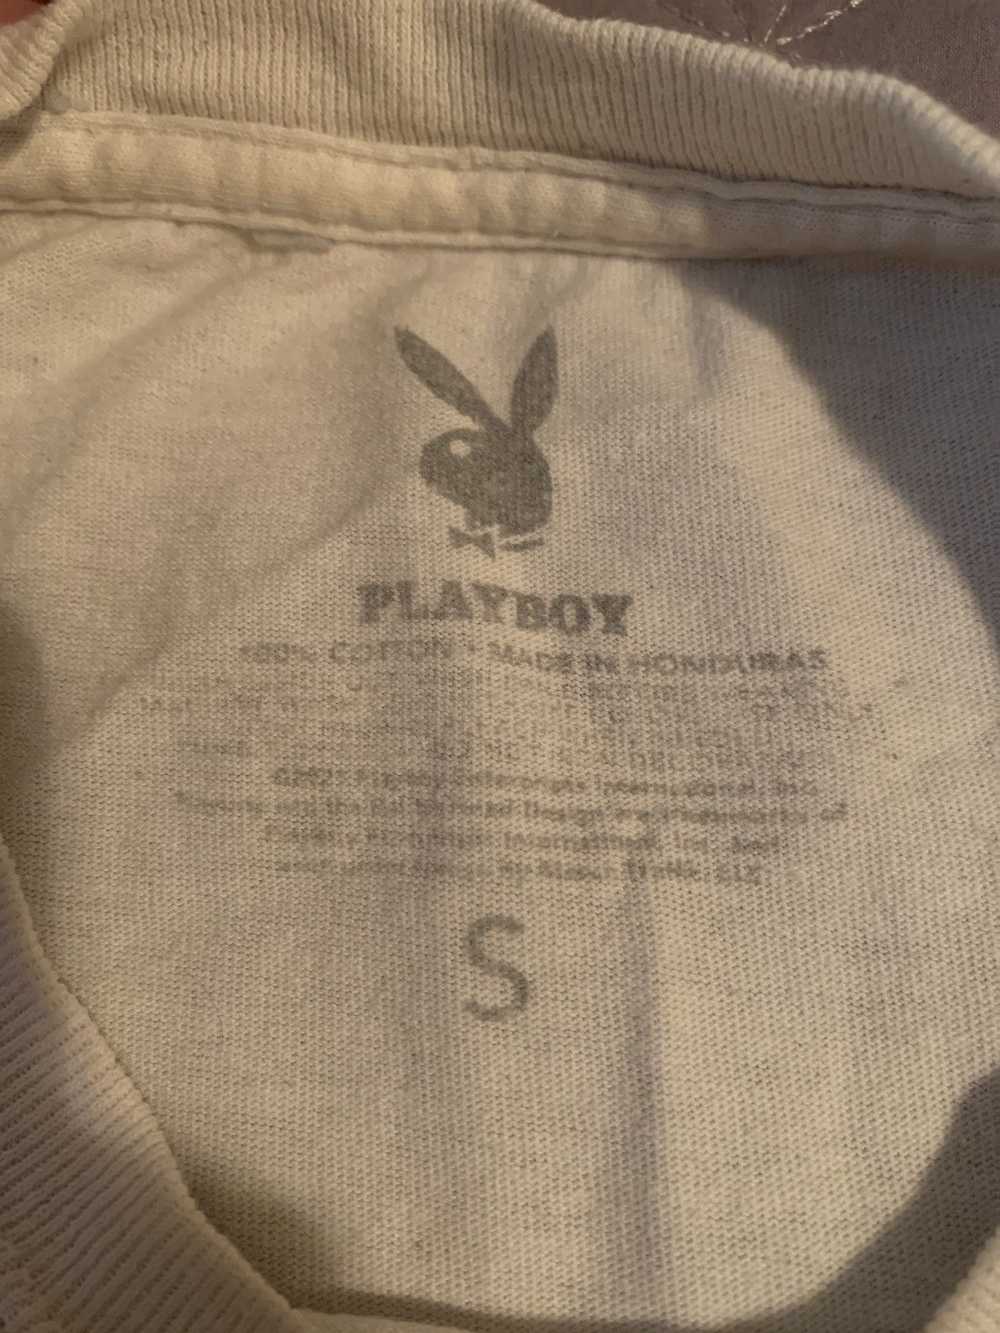 Playboy × Rare × Streetwear Playboy Bunny Shirt - image 3